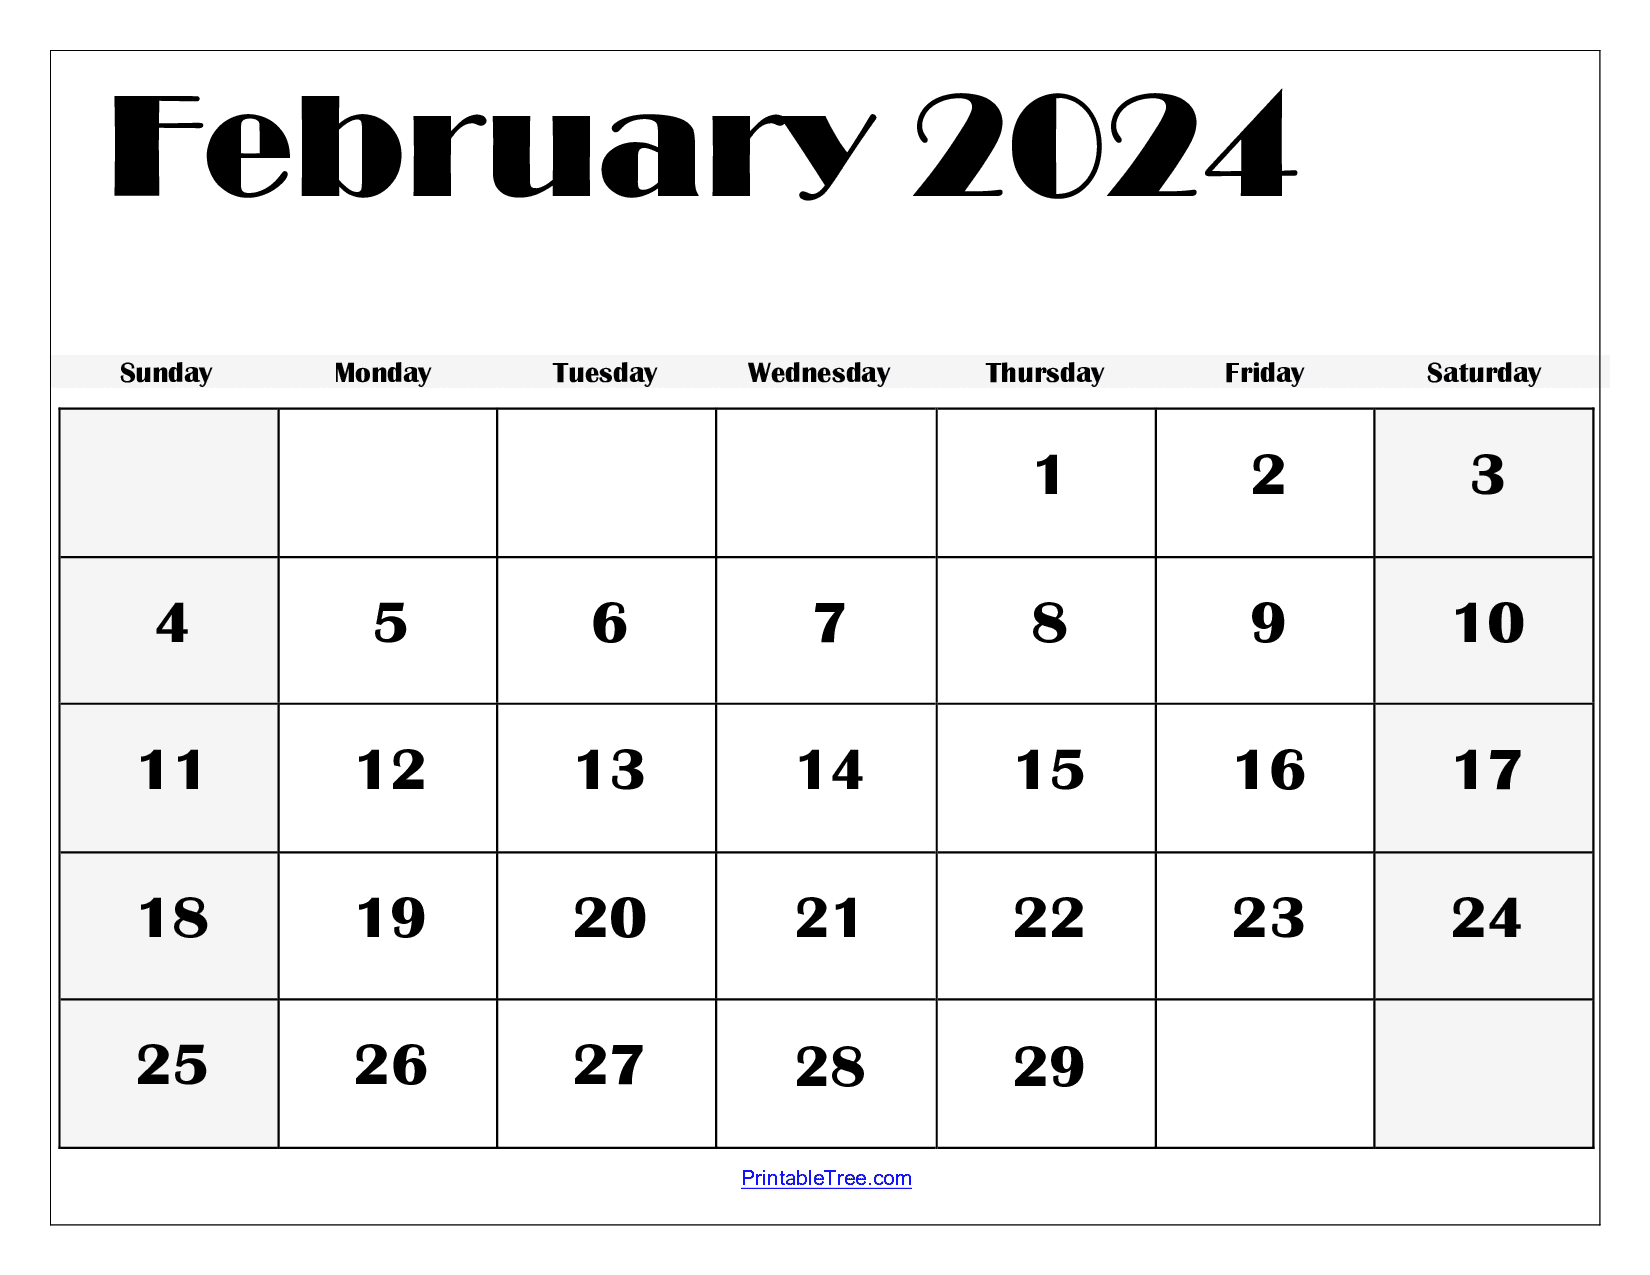 February 2024 Calendar Printable Pdf Template With Holidays for Free February 2024 Calendar Printable